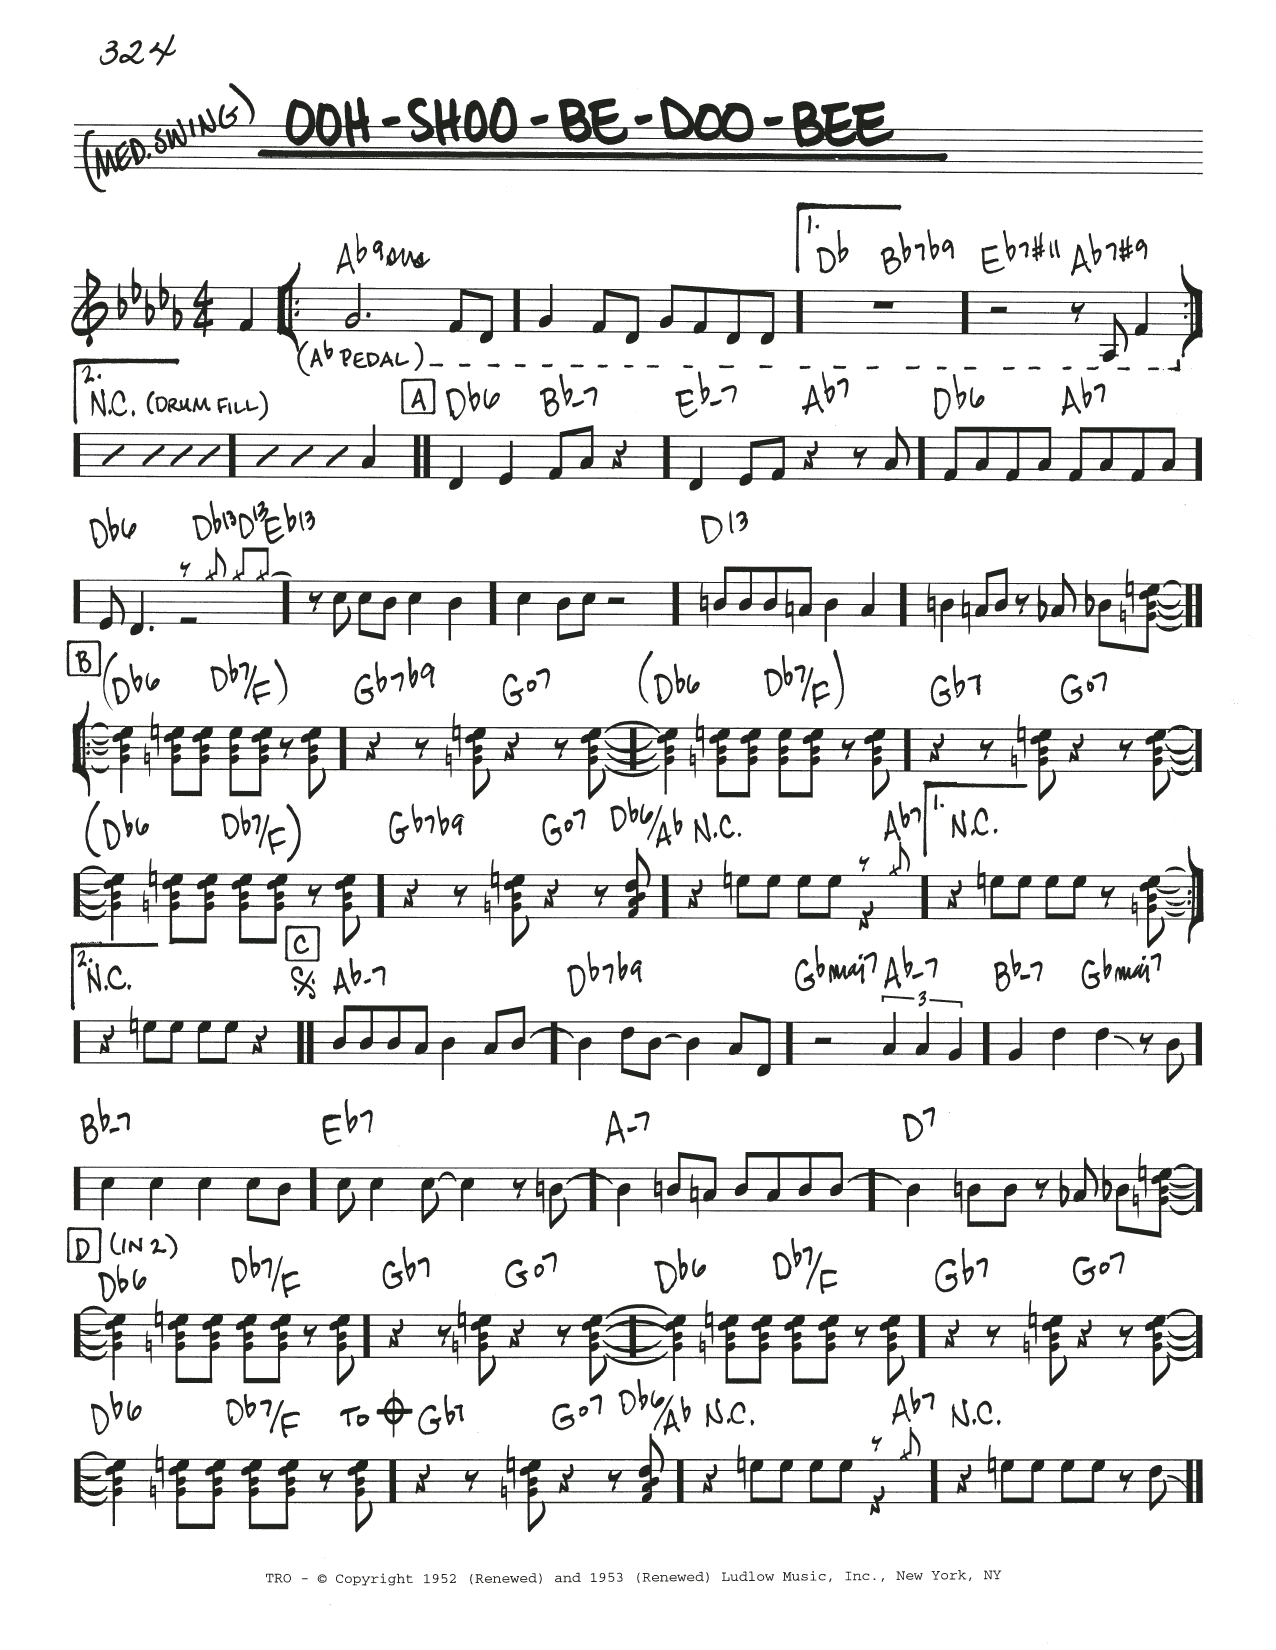 Joe Carroll Oo-shoo-be-doo-be Sheet Music Notes & Chords for Real Book – Melody & Chords - Download or Print PDF